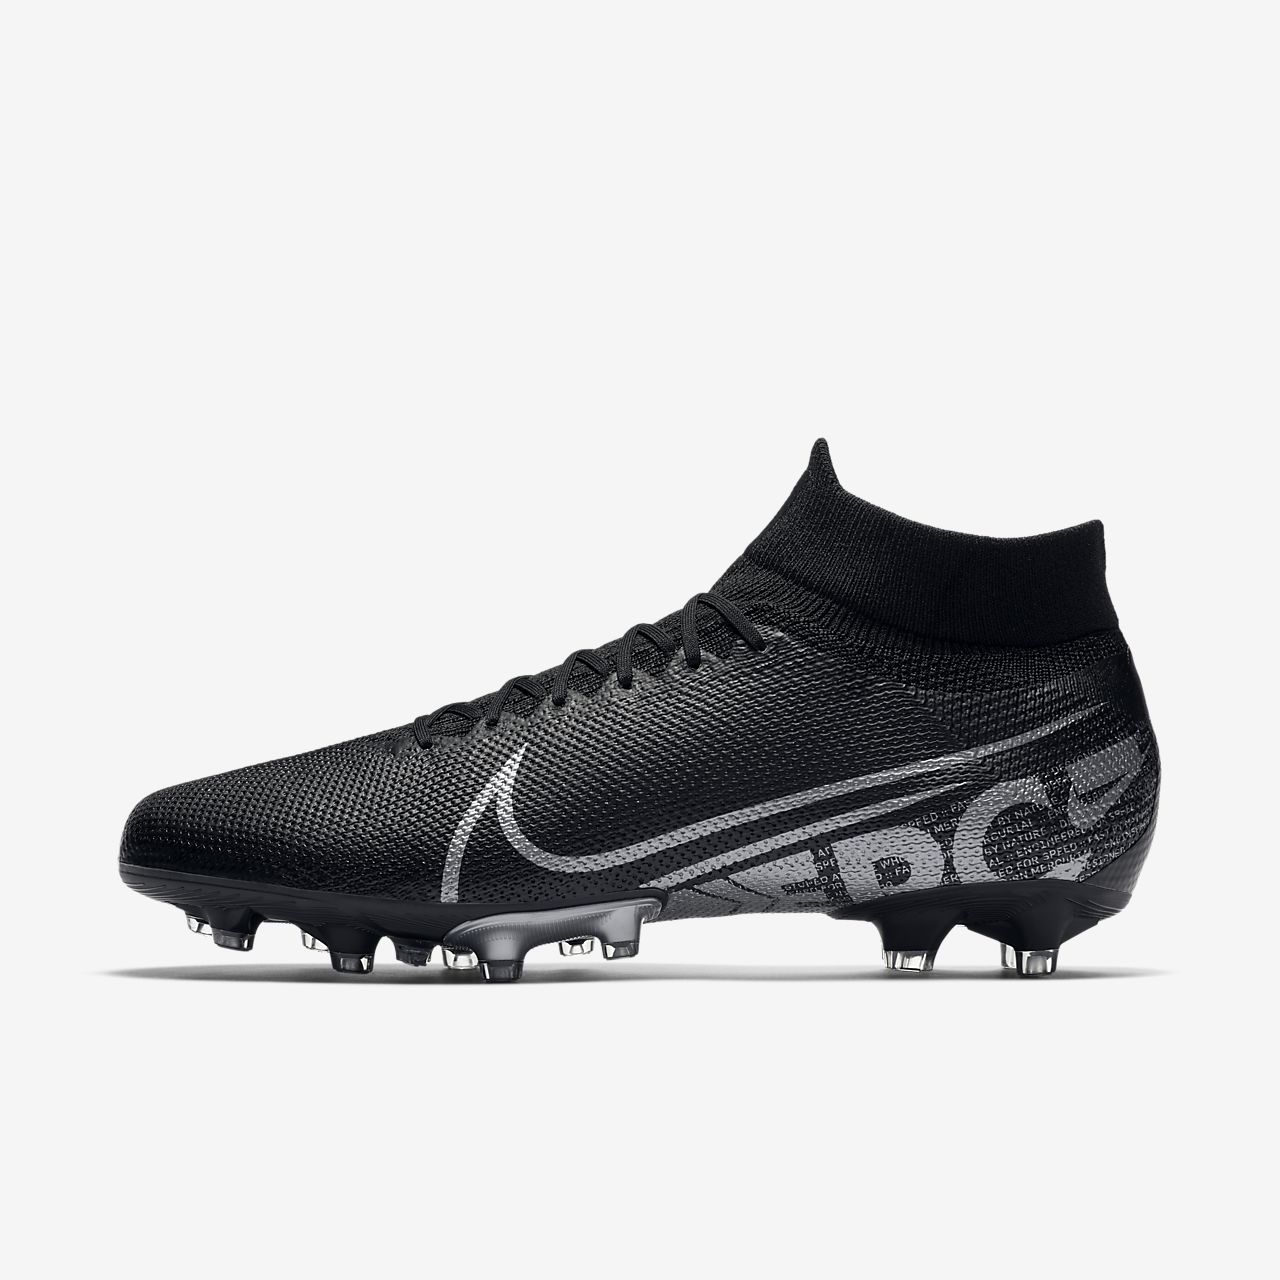 Nike Mercurial Superfly VII Pro Football Boots Black. Rebel